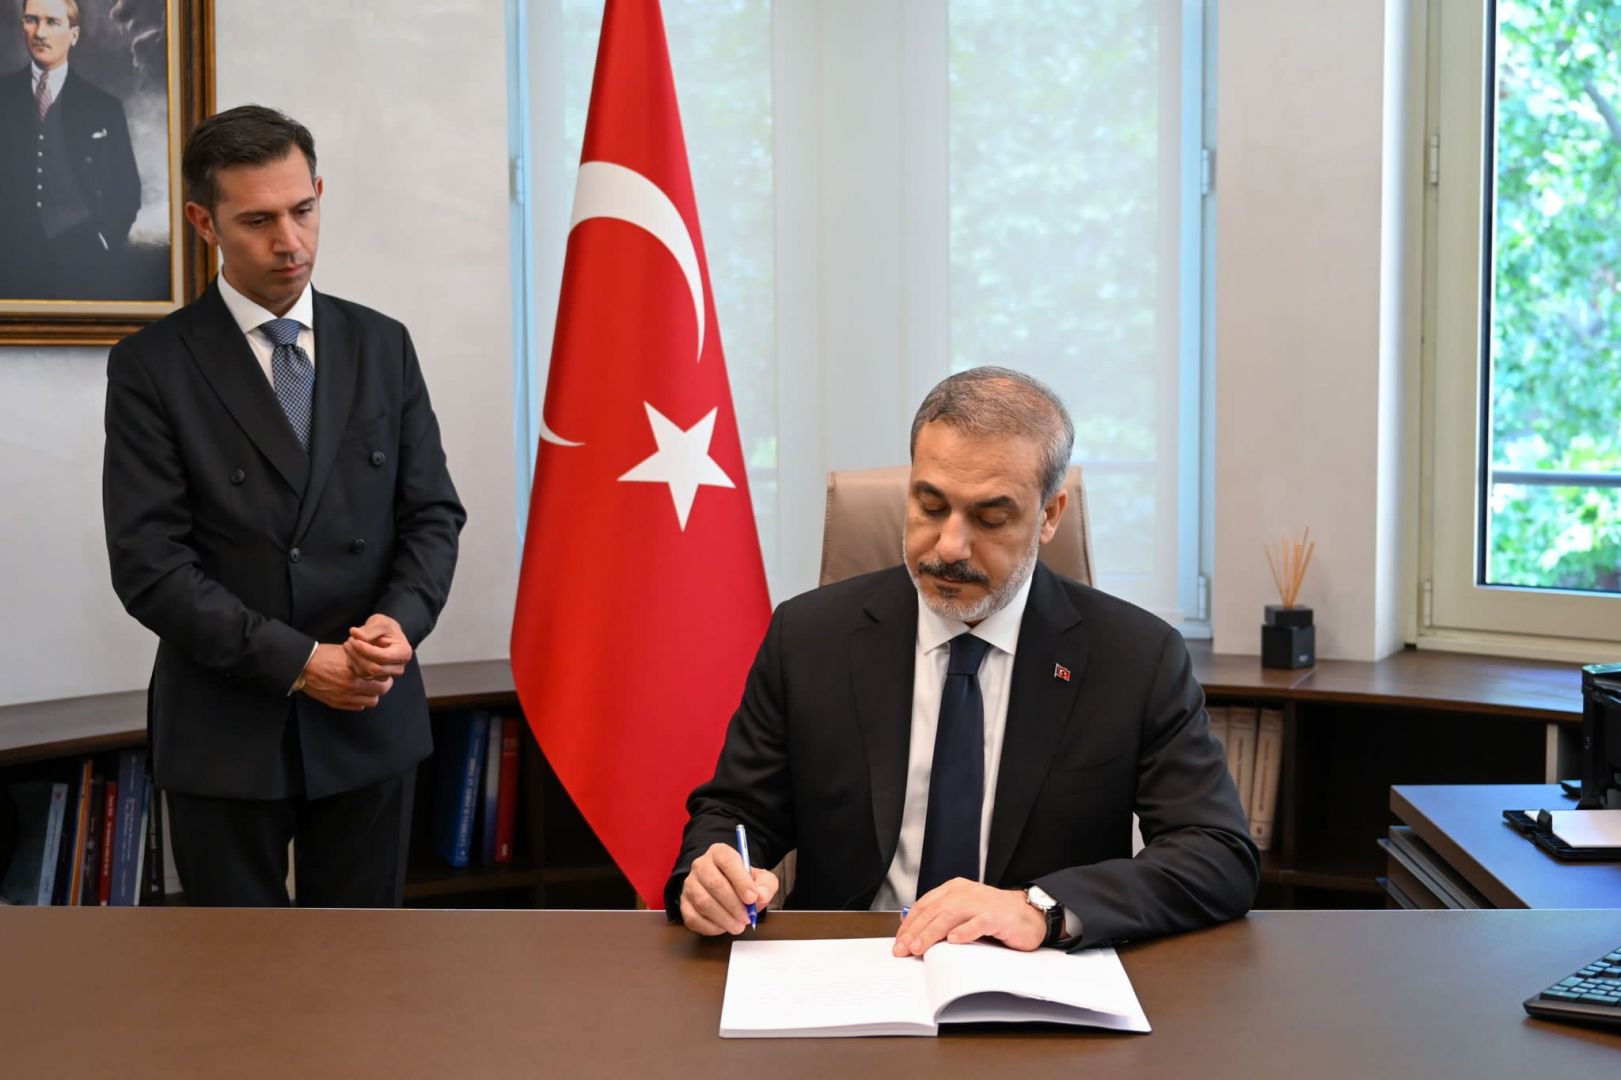 Turkiye appoints new ambassadors, representatives to missions abroad